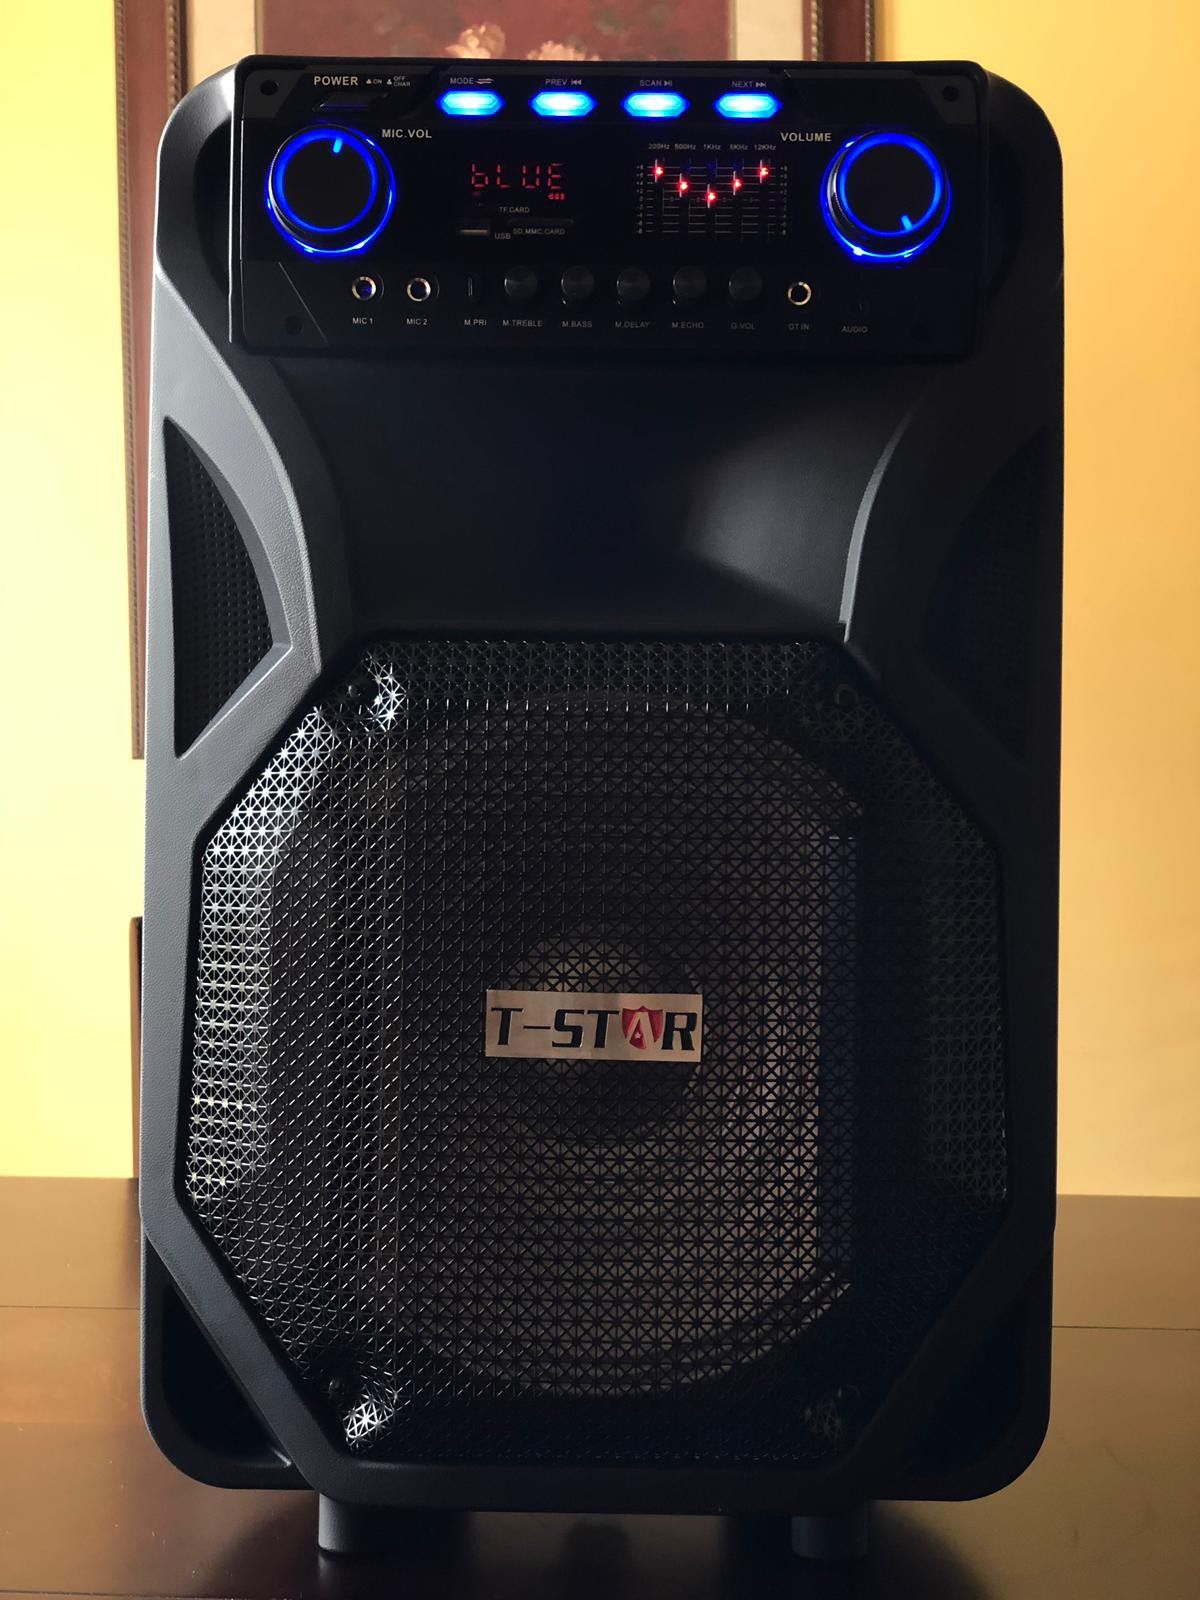 Speaker 4800W amplificada Woofer 12" bluetooth karaoke Ecualizador micrófono inalámbrico súper bass **Delivery gratis 10 millas max**